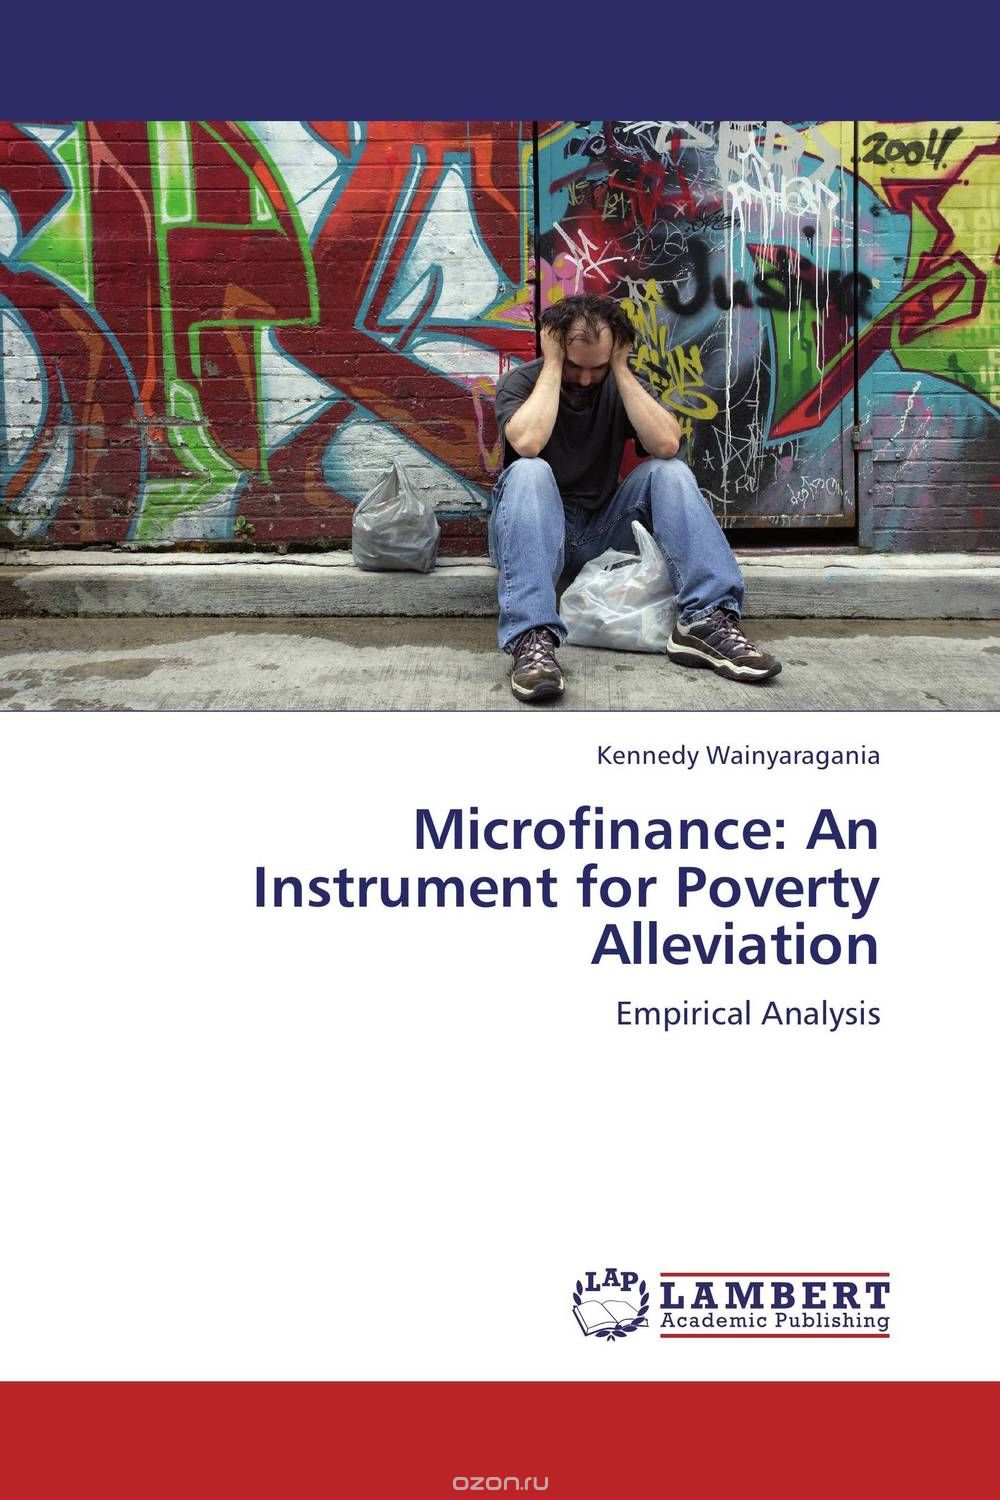 Скачать книгу "Microfinance: An Instrument for Poverty Alleviation"